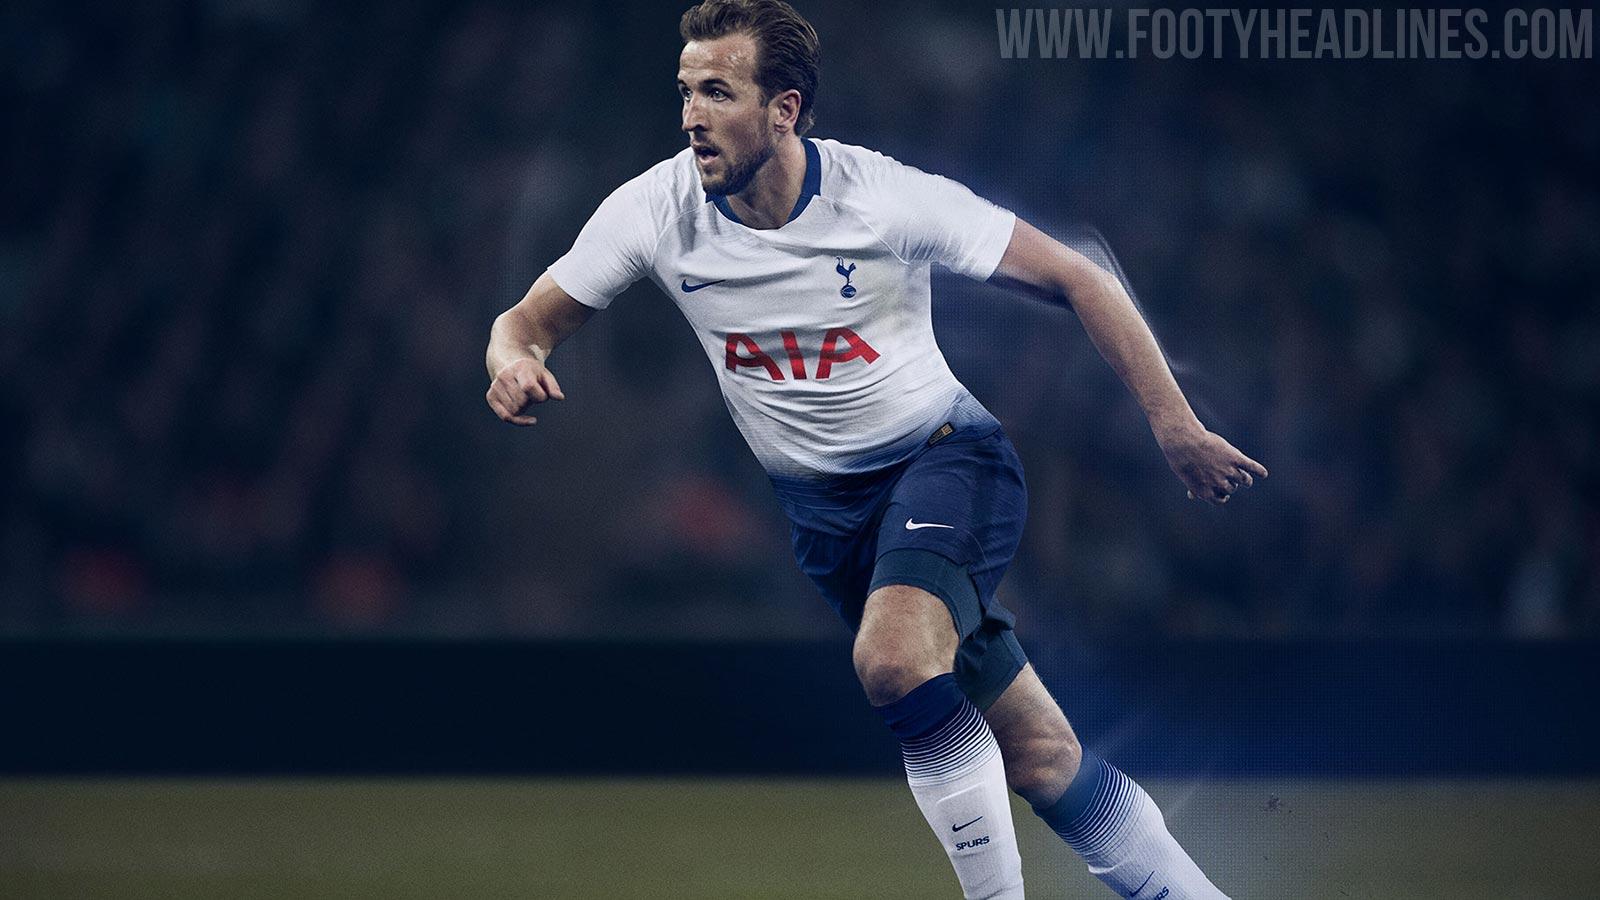 Nike Tottenham Hotspur 18 19 Home Kit Released